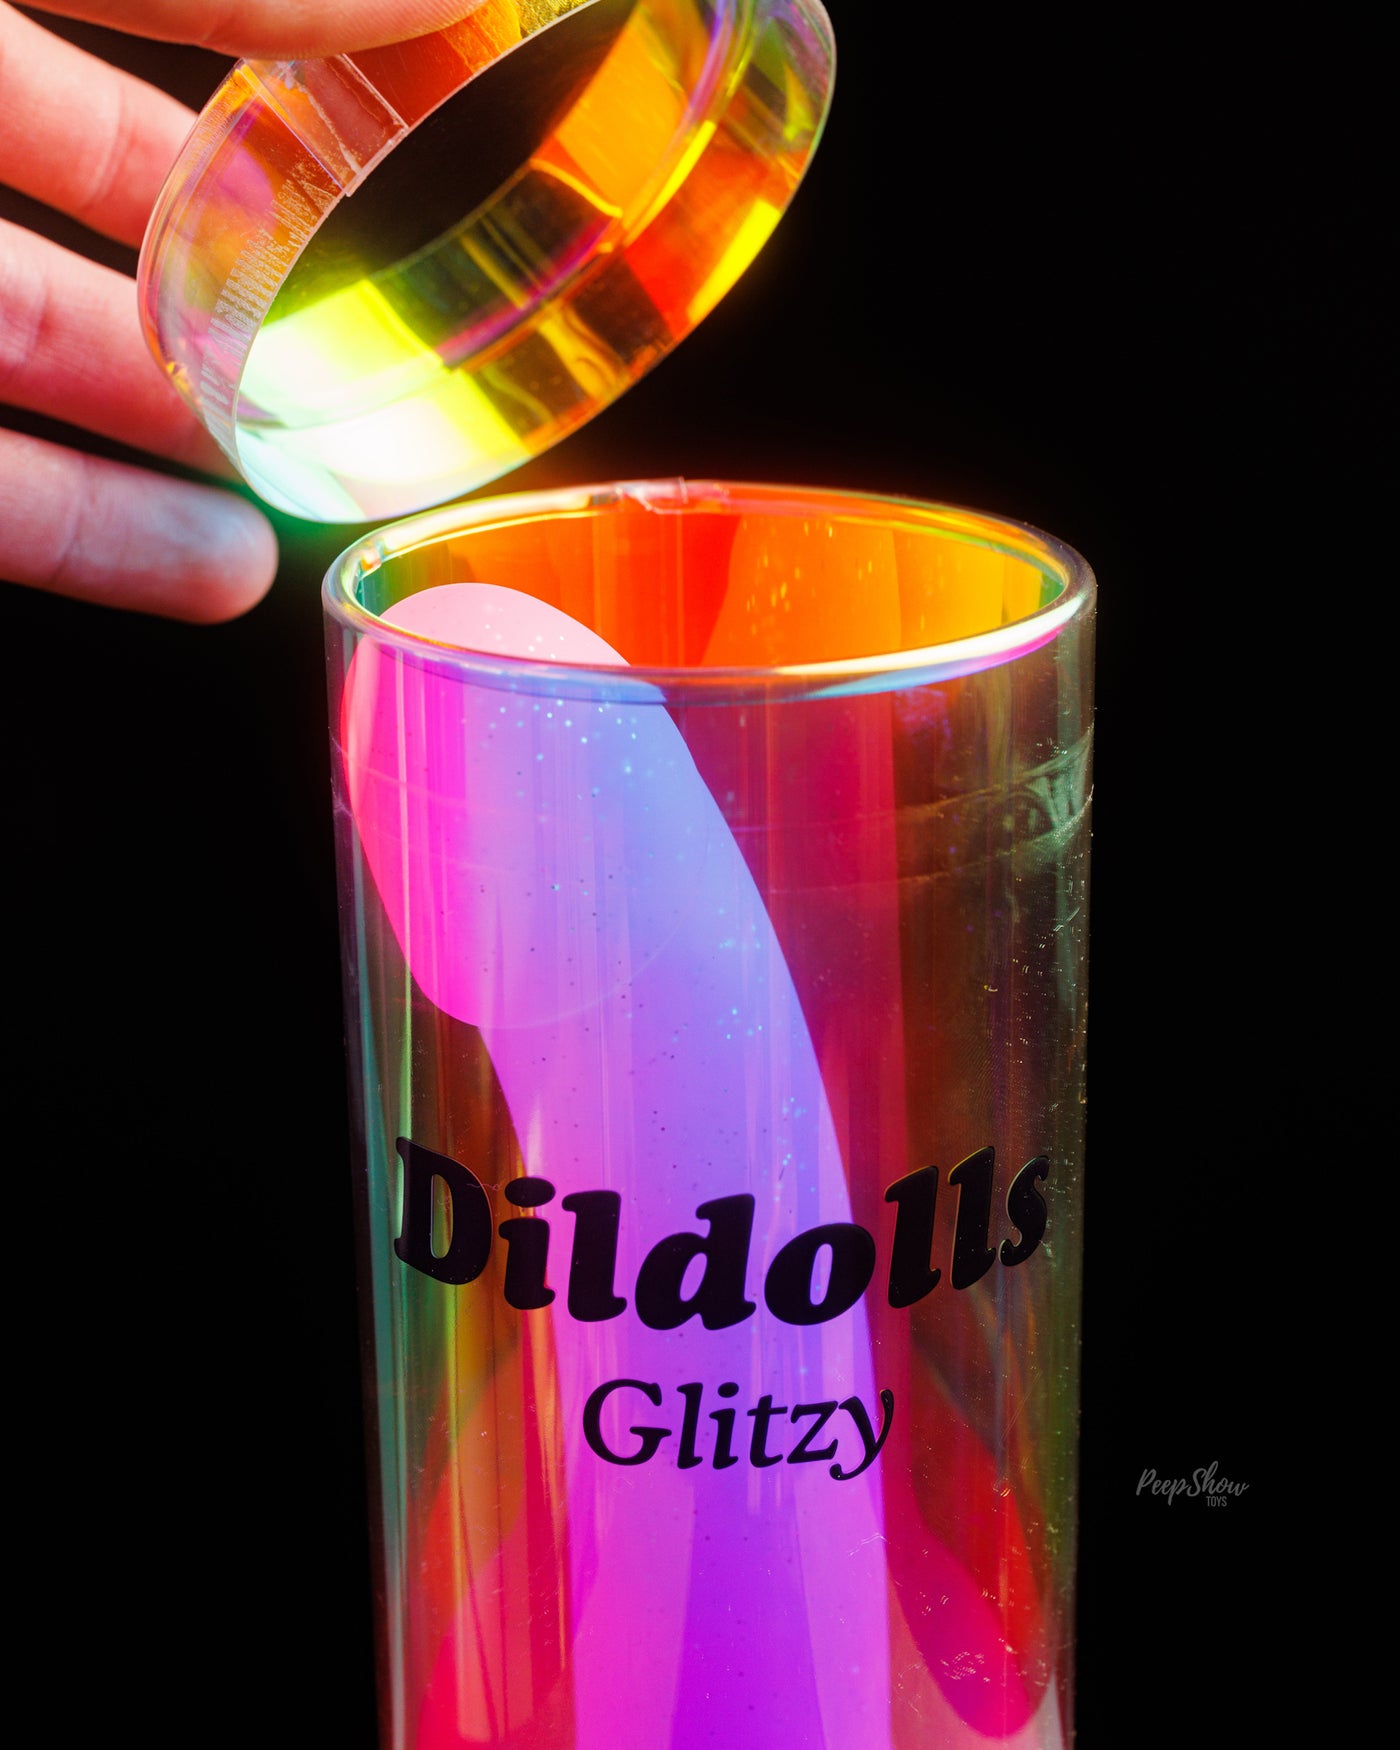 Dildodolls Glitzy Silicone Dildo in Packaging